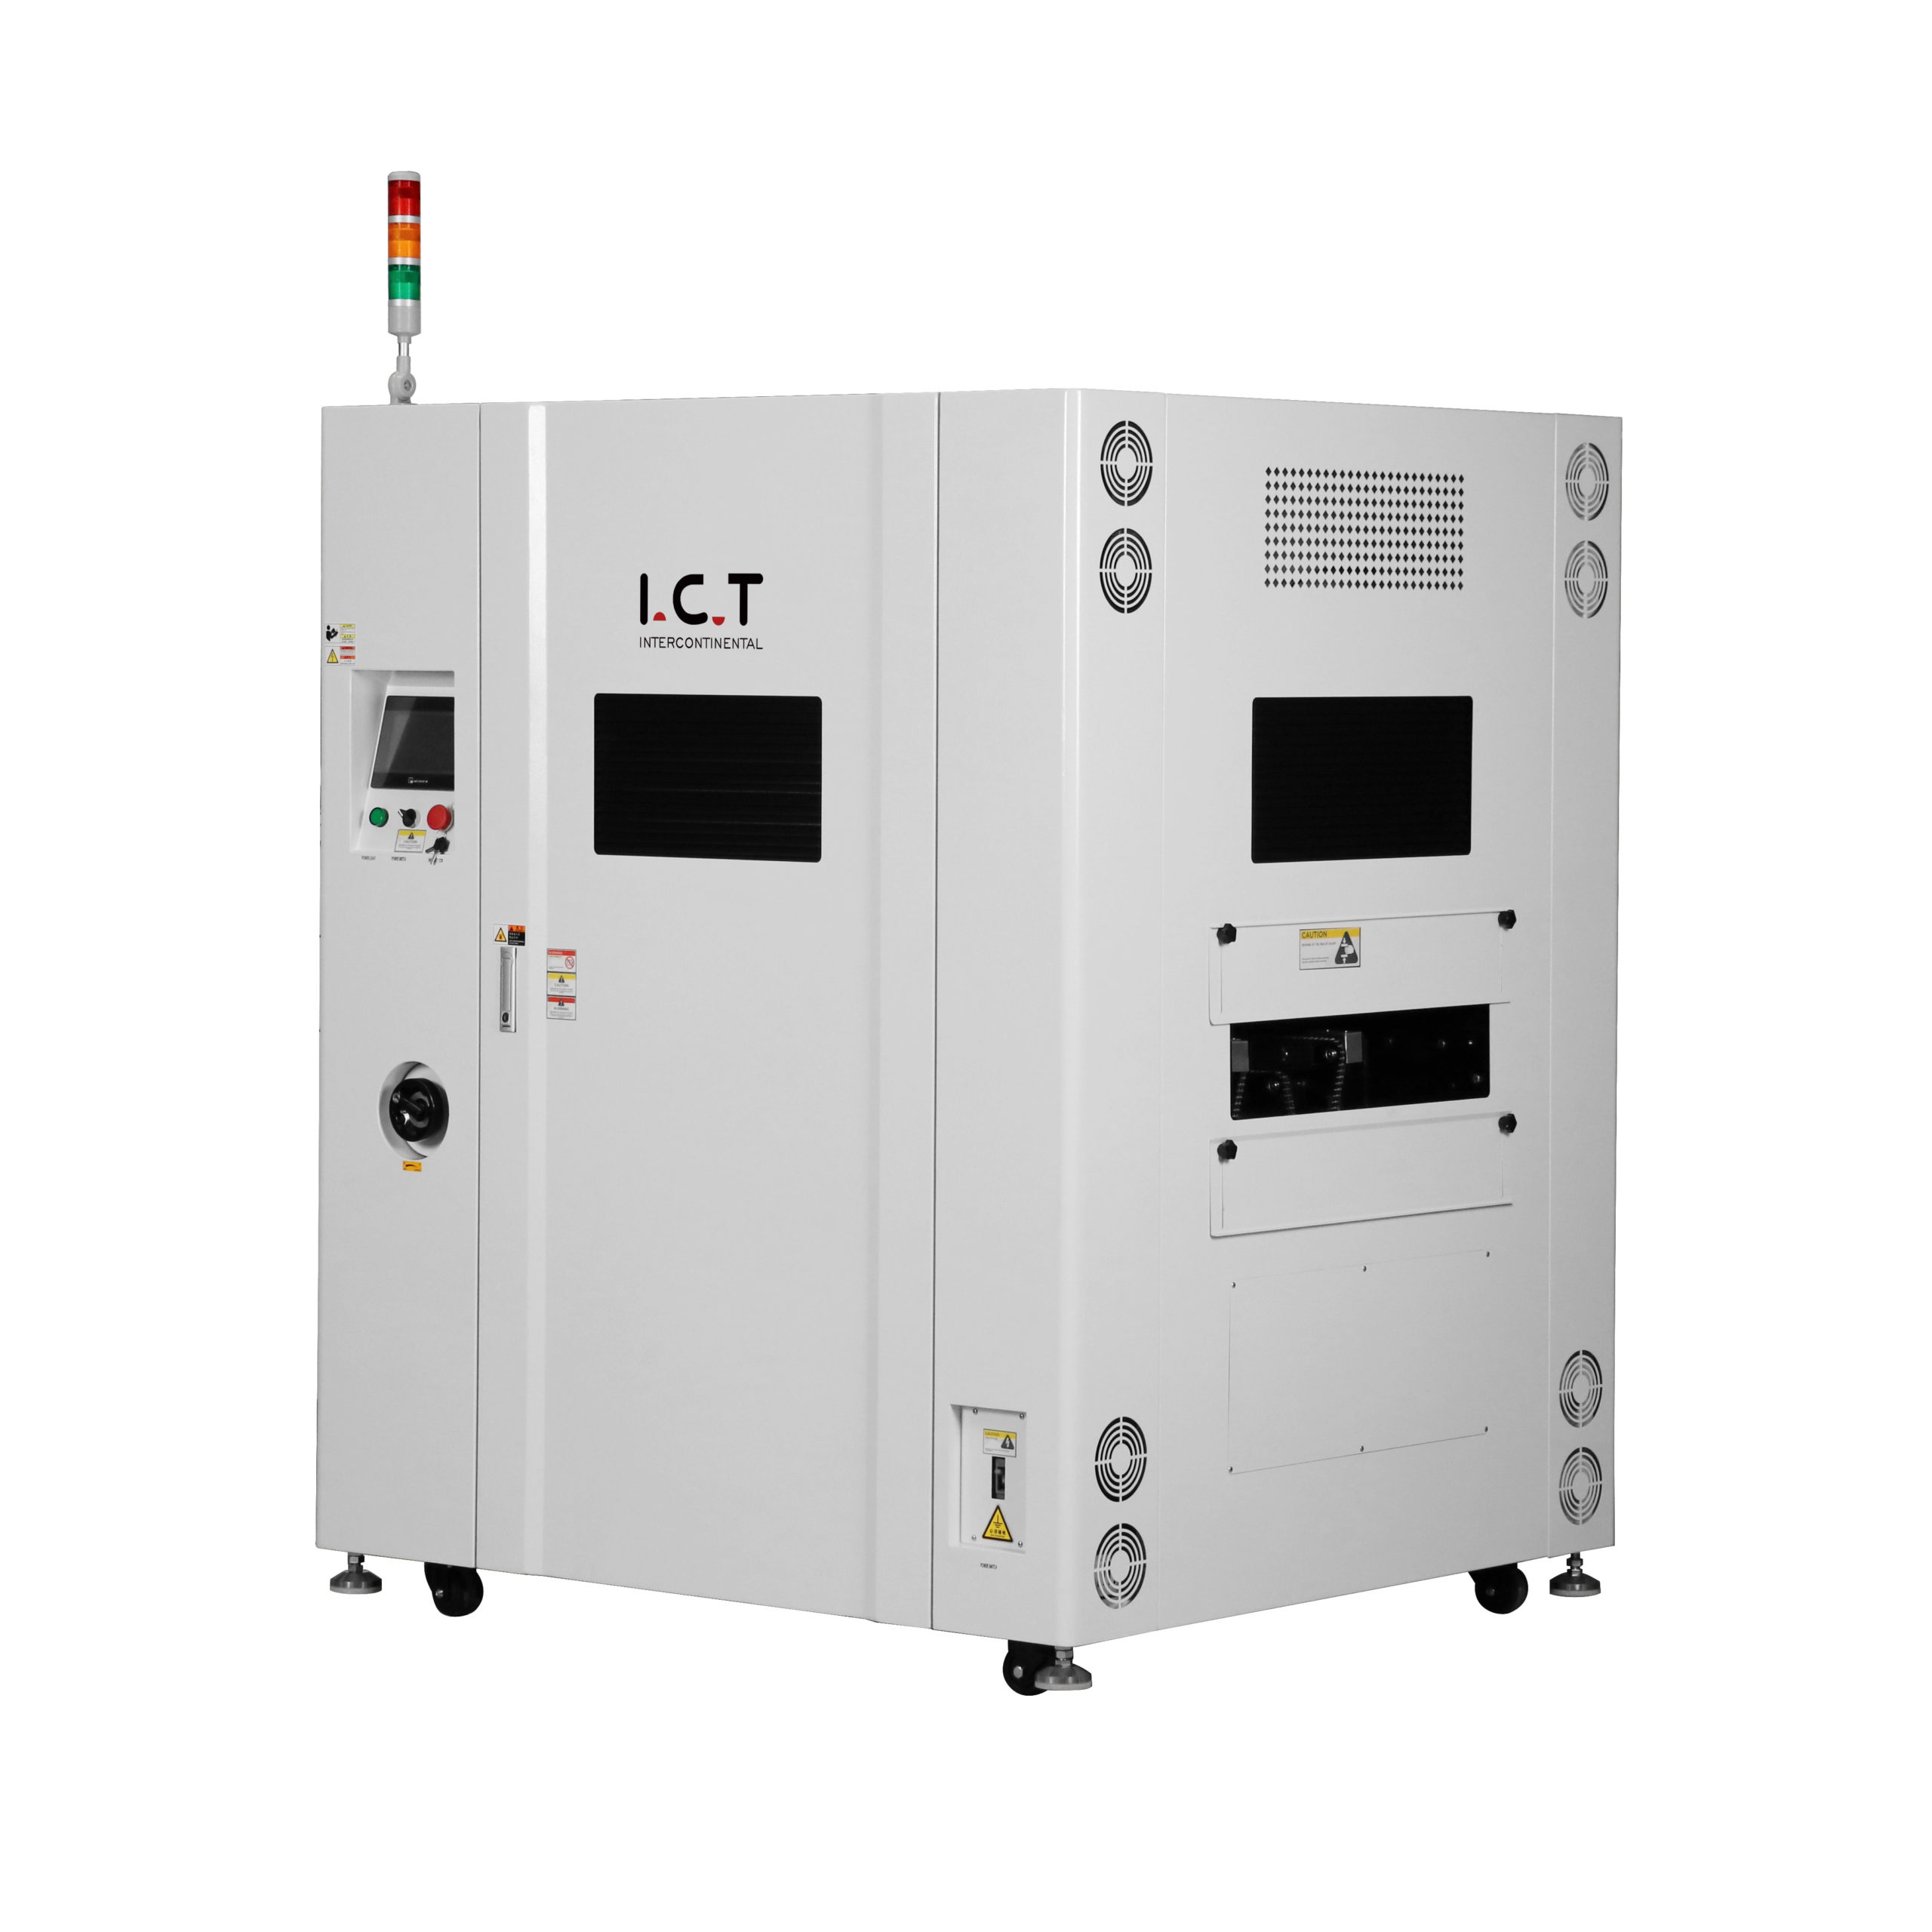 I.C.T conformal UV Curing Oven-U2